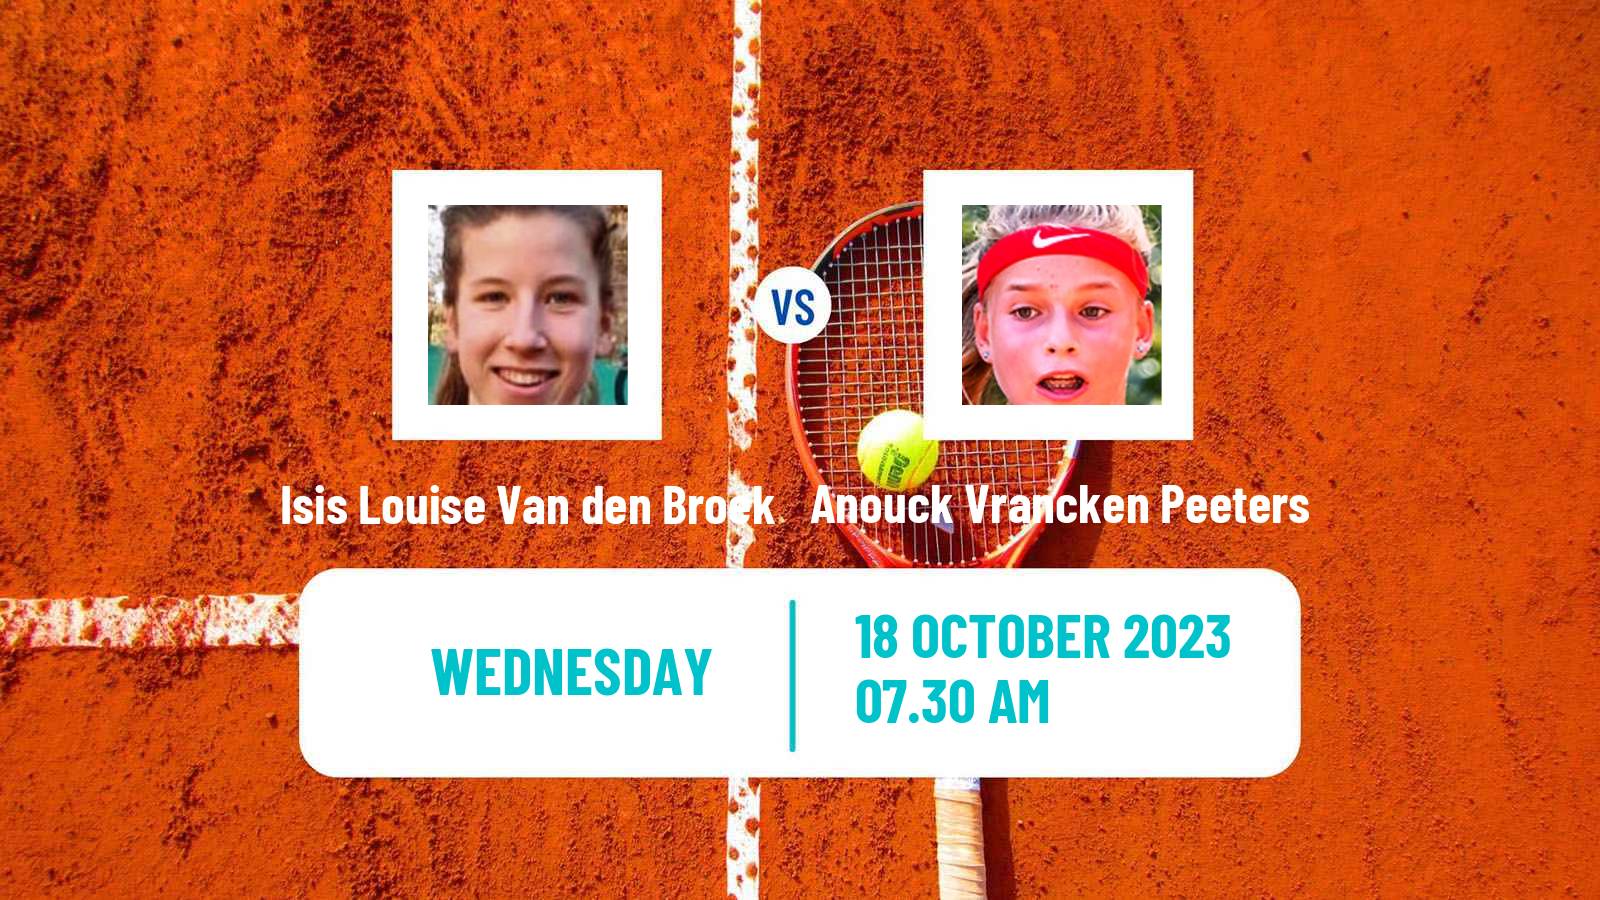 Tennis ITF W15 Sharm Elsheikh 22 Women Isis Louise Van den Broek - Anouck Vrancken Peeters